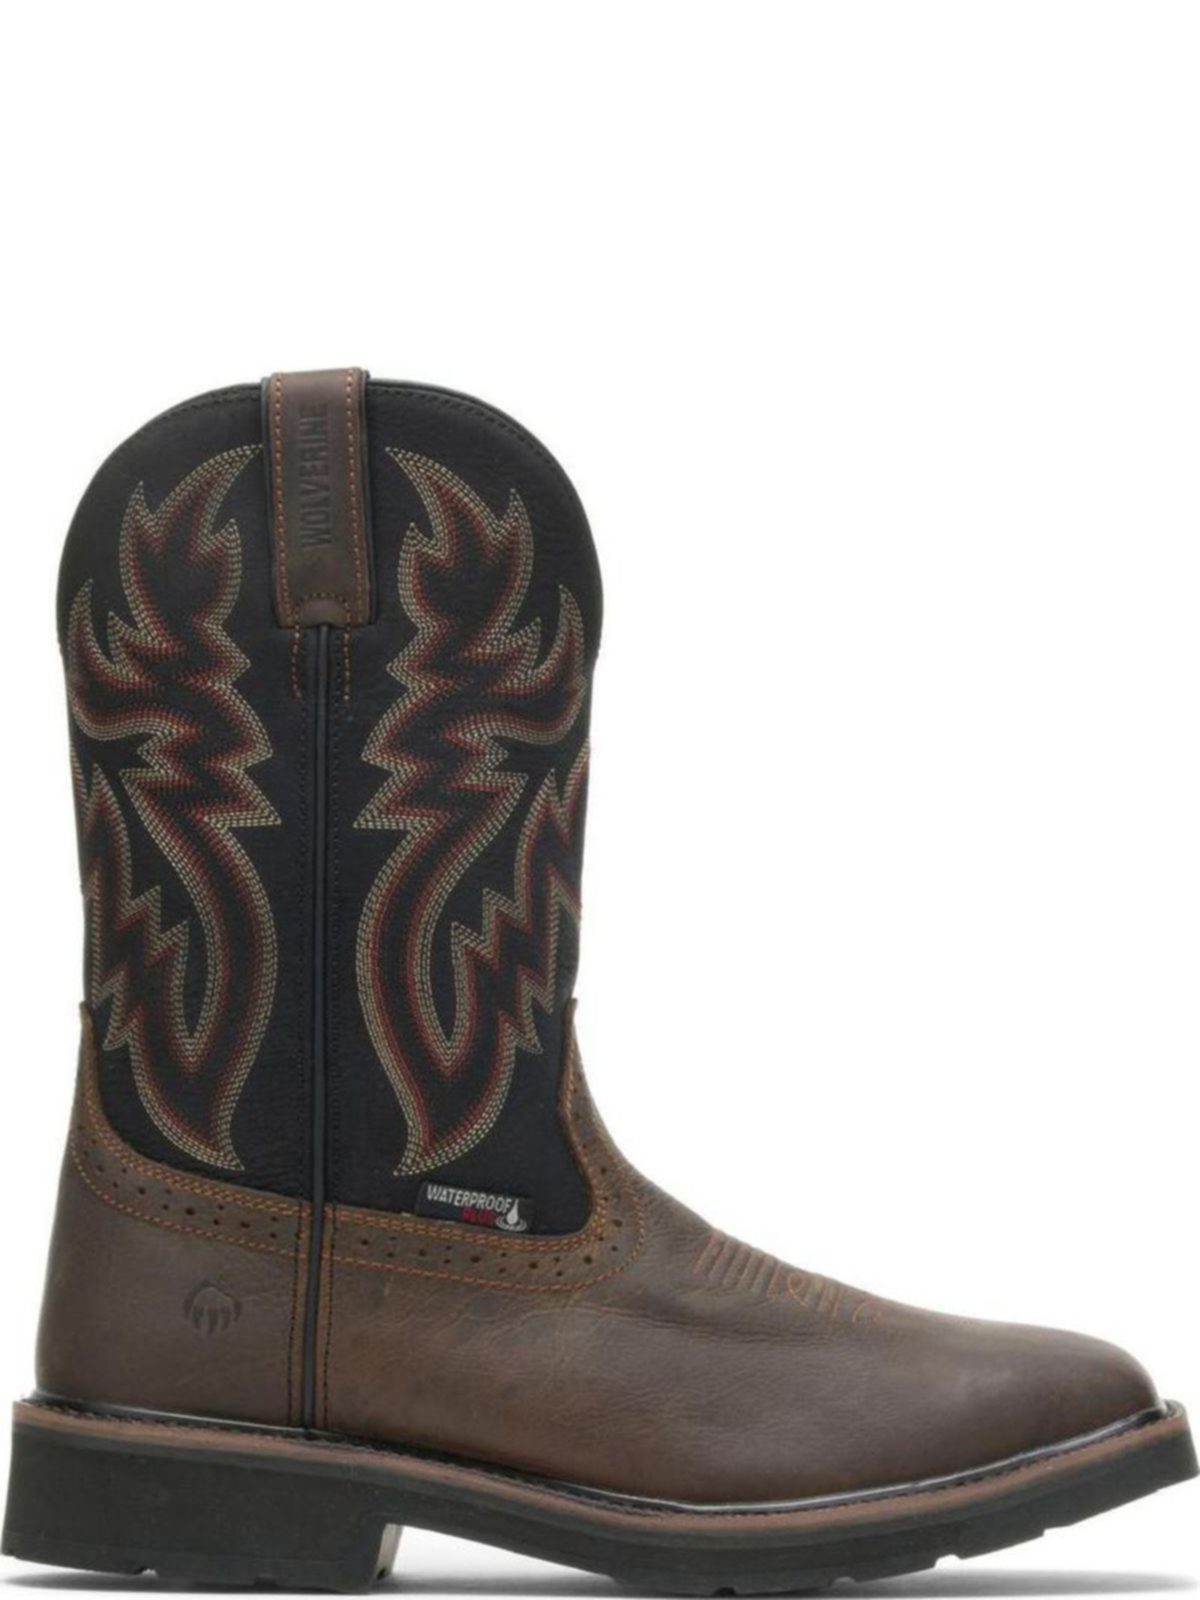 wolverine rancher st boots